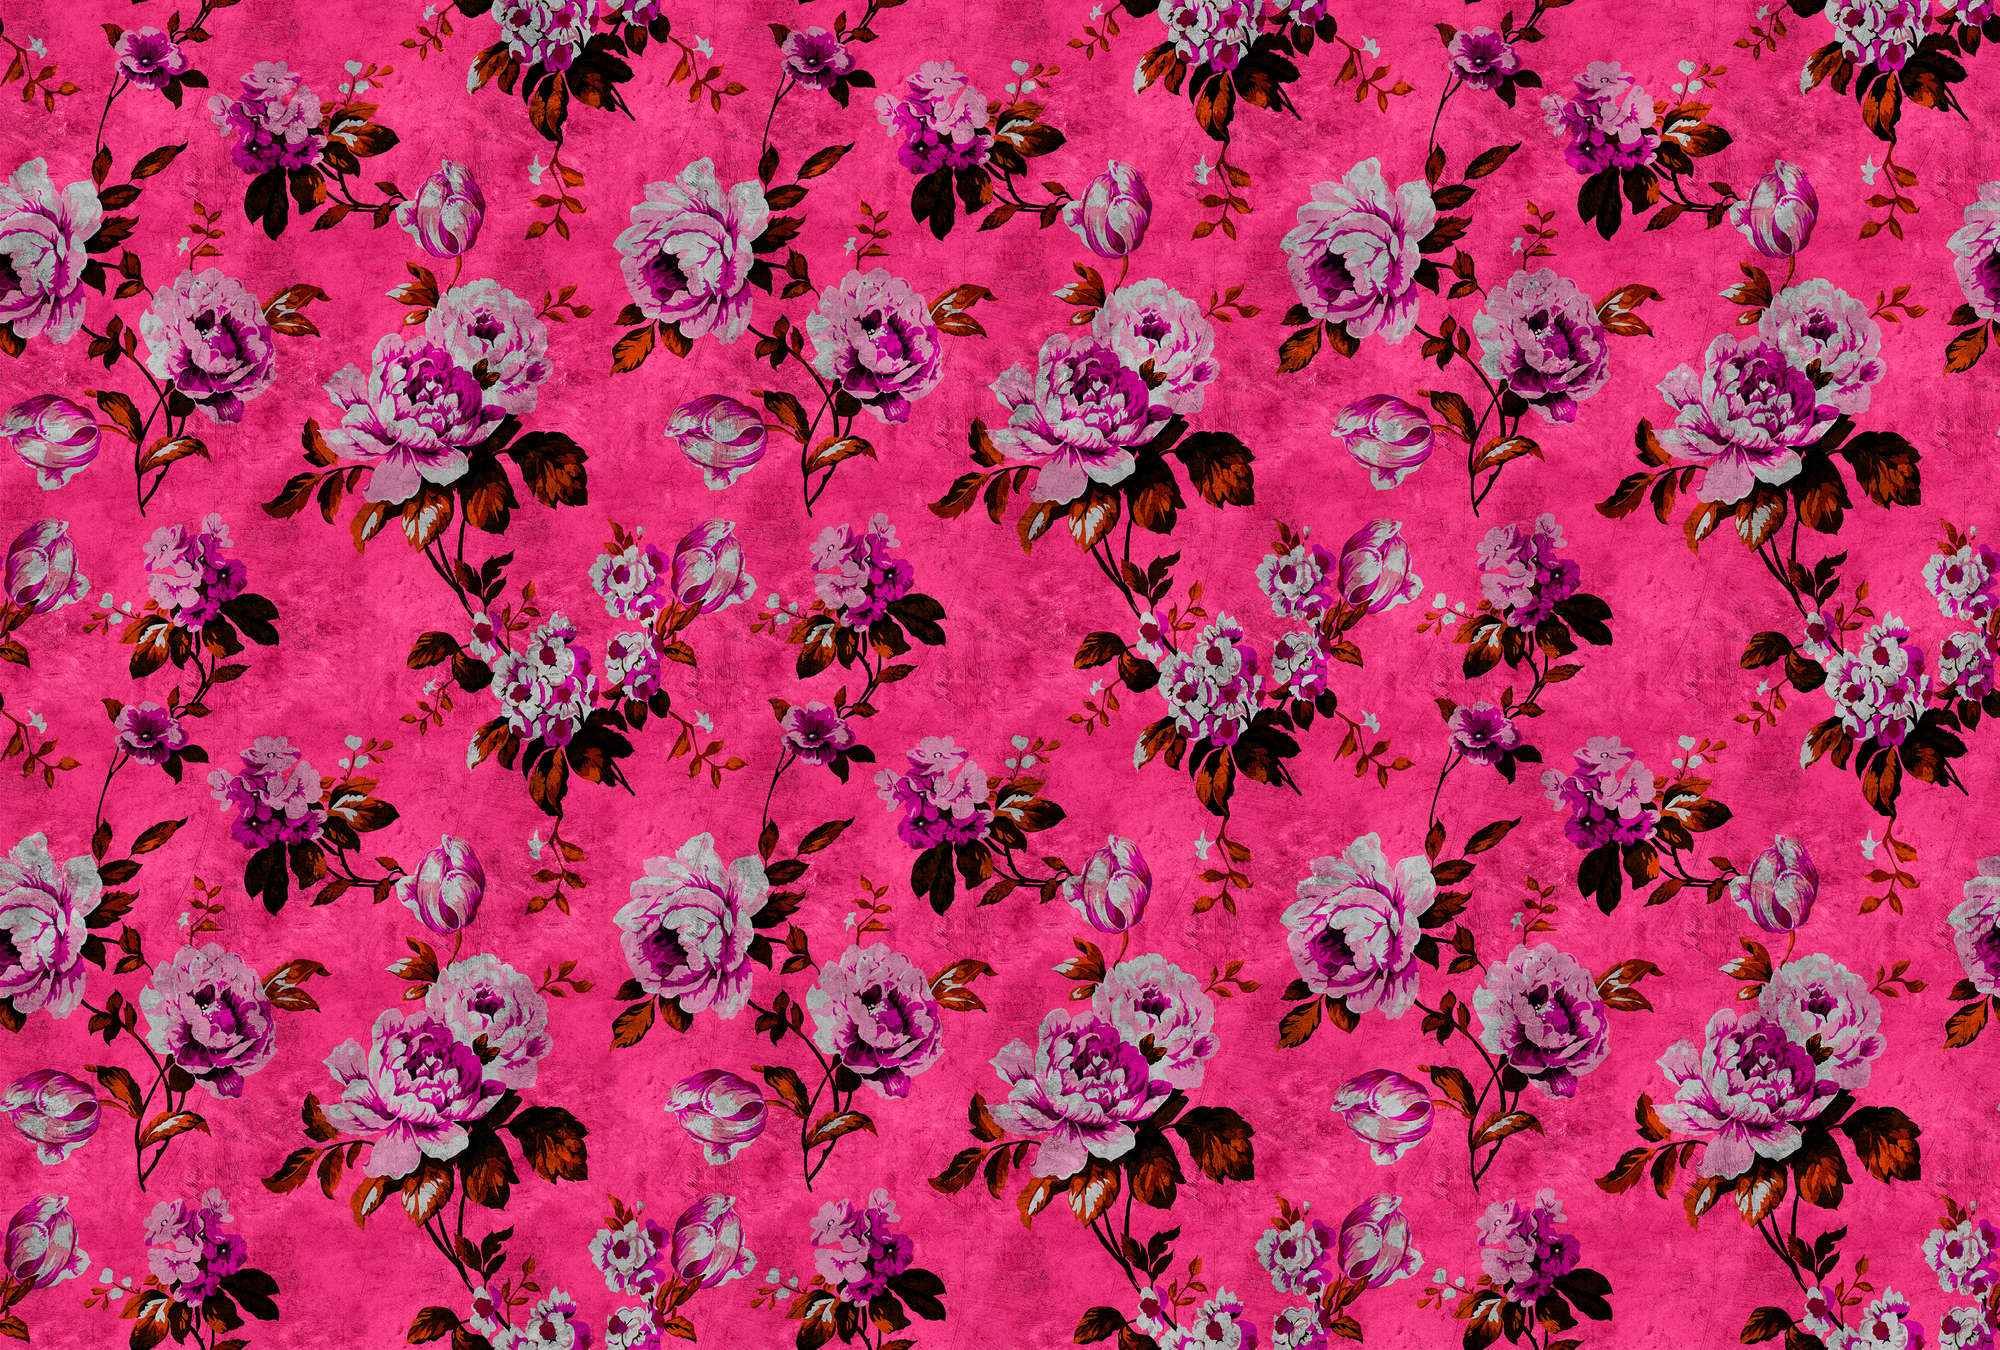             Wild roses 3 - Rosen Fototapete im Retrolook, Pink- Kratzer Struktur – Rosa, Rot | Mattes Glattvlies
        